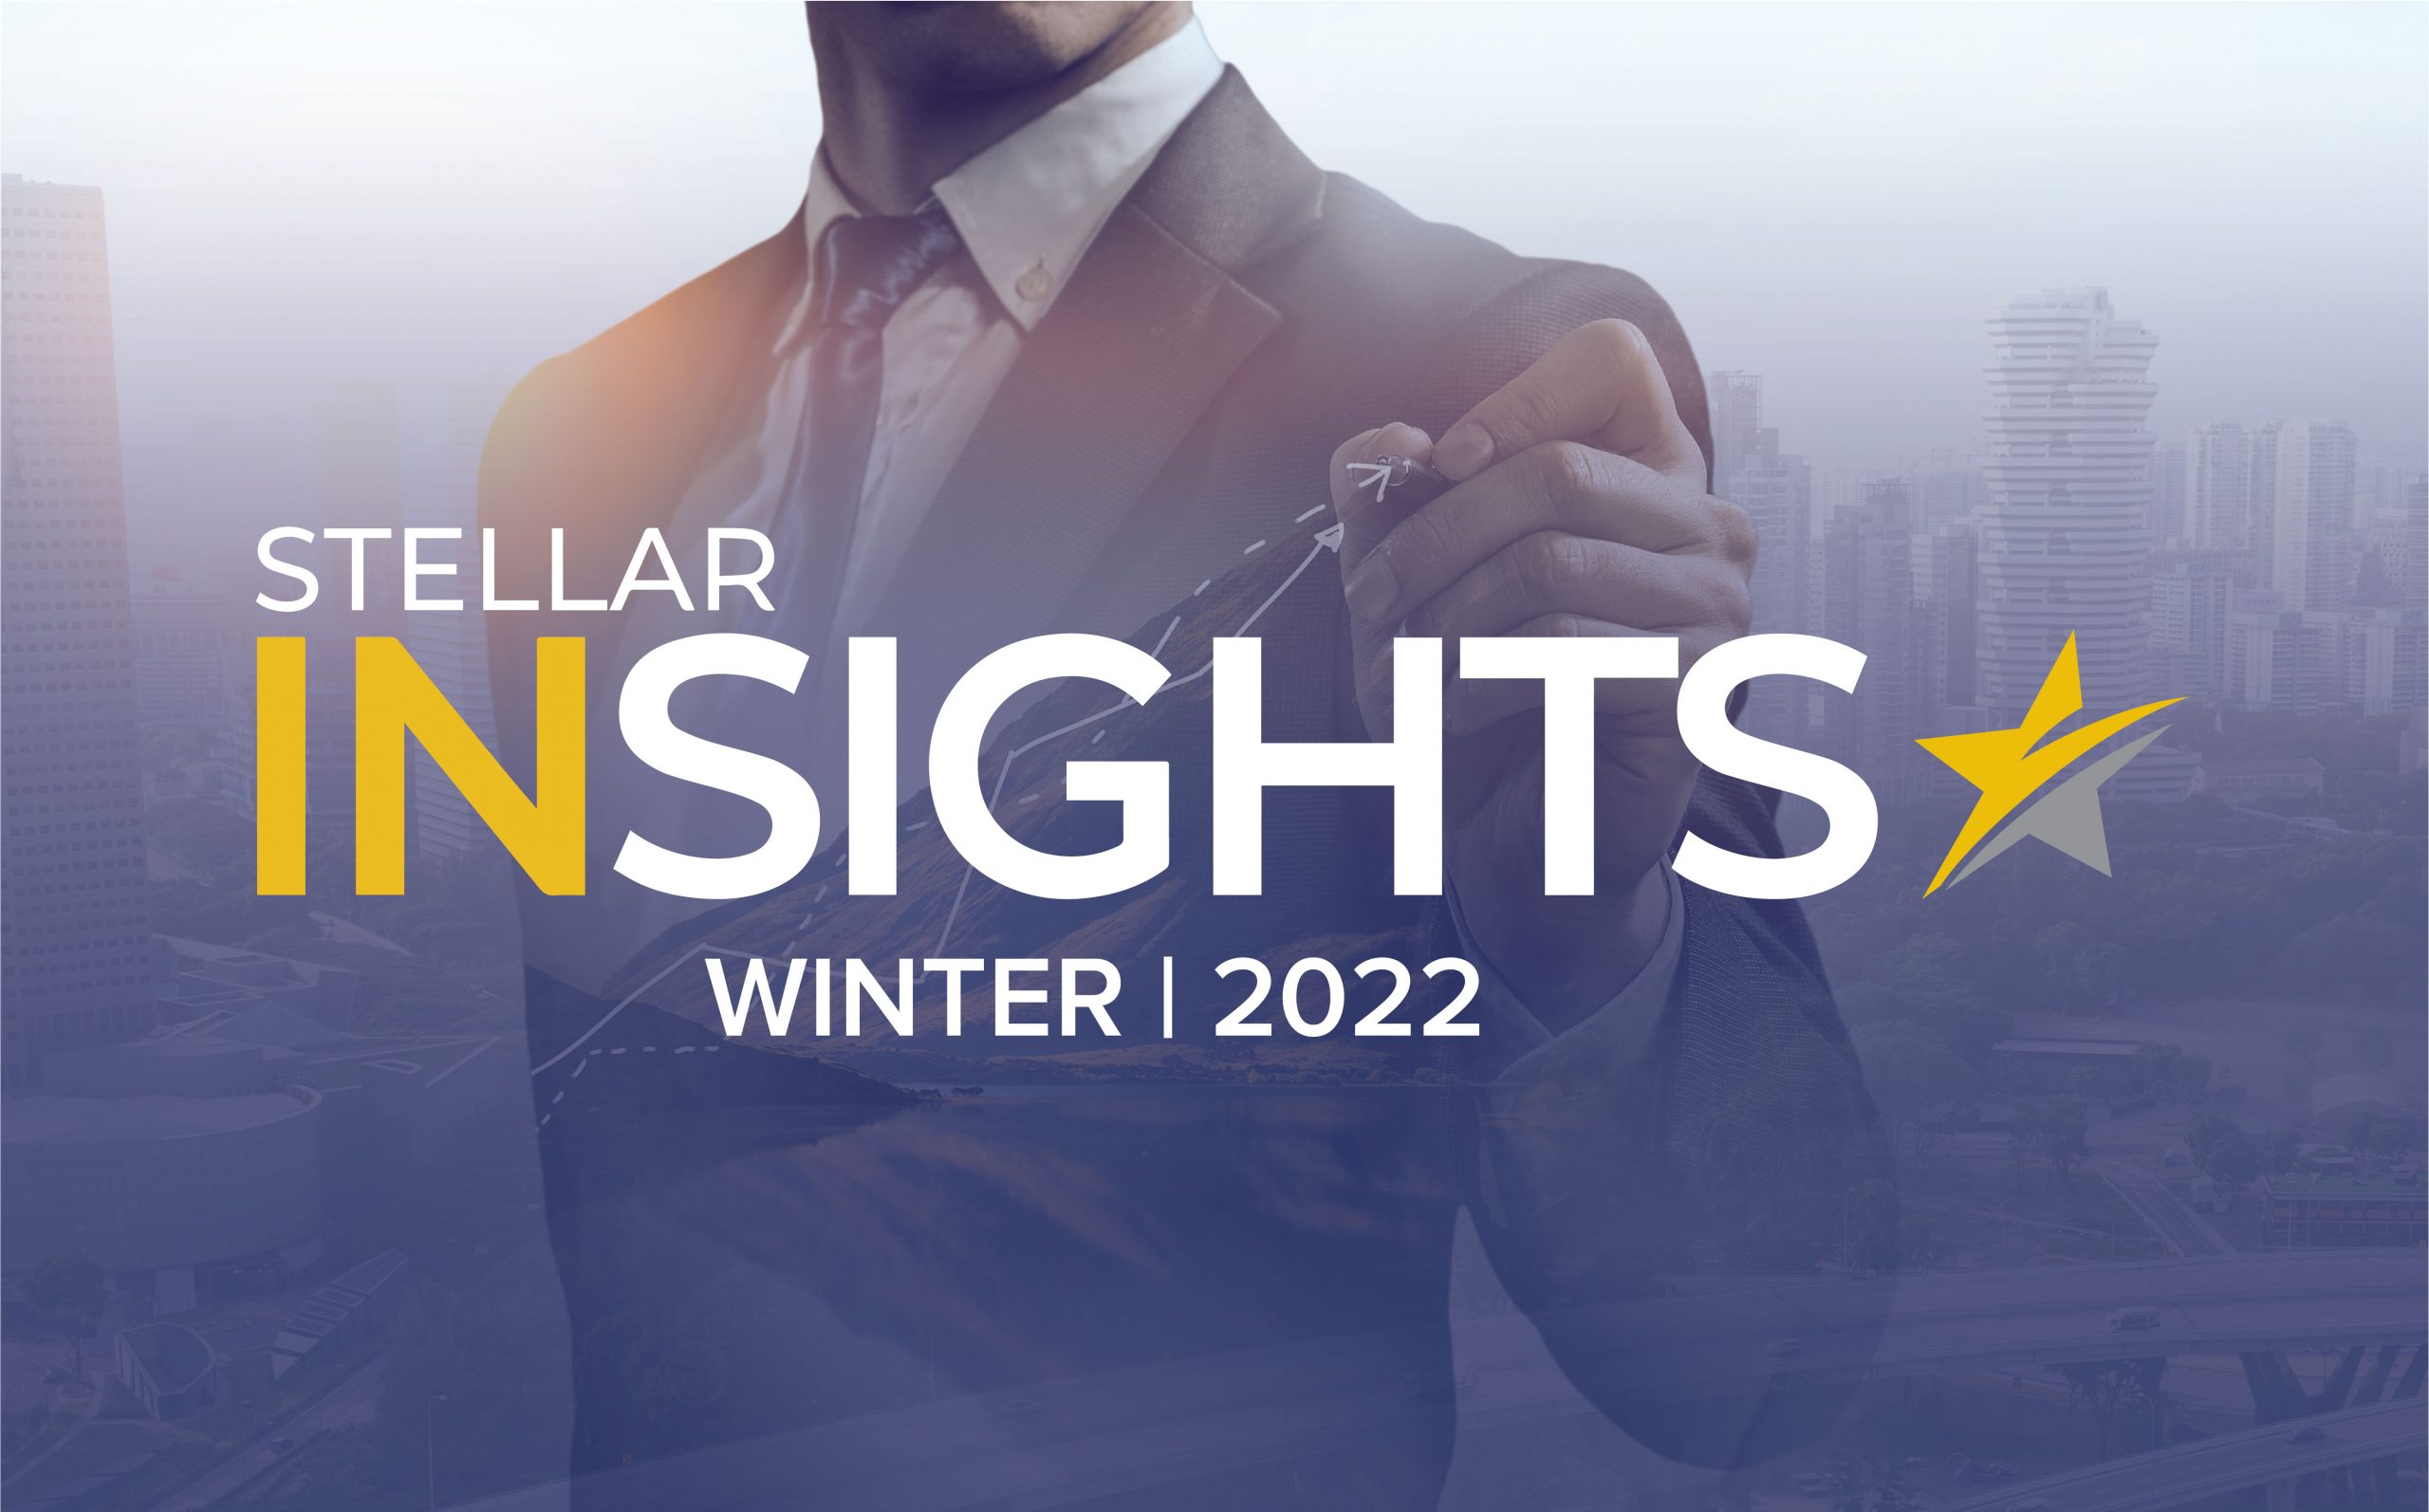 Winter 2022 Edition of Stellar Insights